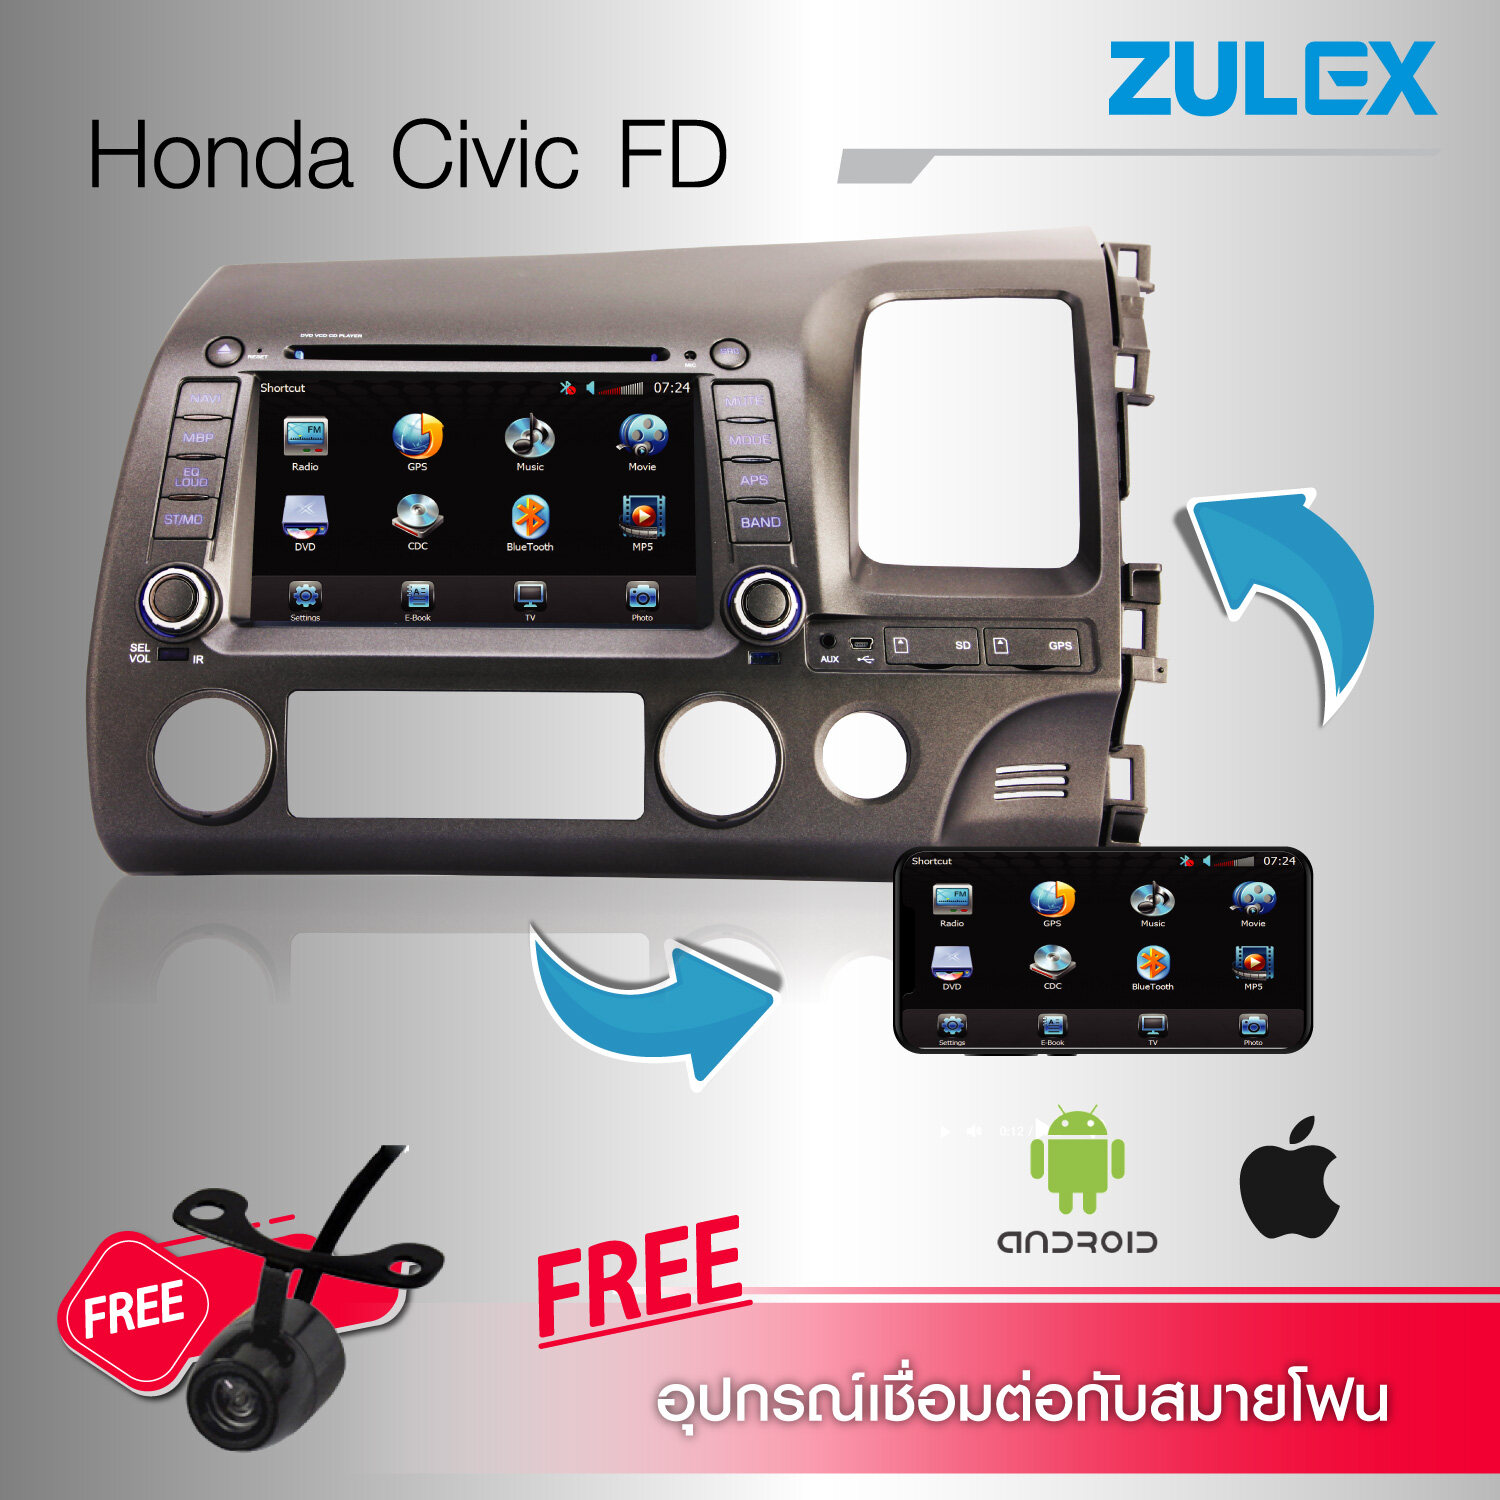 zulex รุ่น PR-CIVIC09(G) เครื่องเสียงติดรถยนต์honda civic fd เชื่อมต่อสมาร์ทโฟนดูหนังฟังเพลง Mirror Link DVD GPS, youtube,